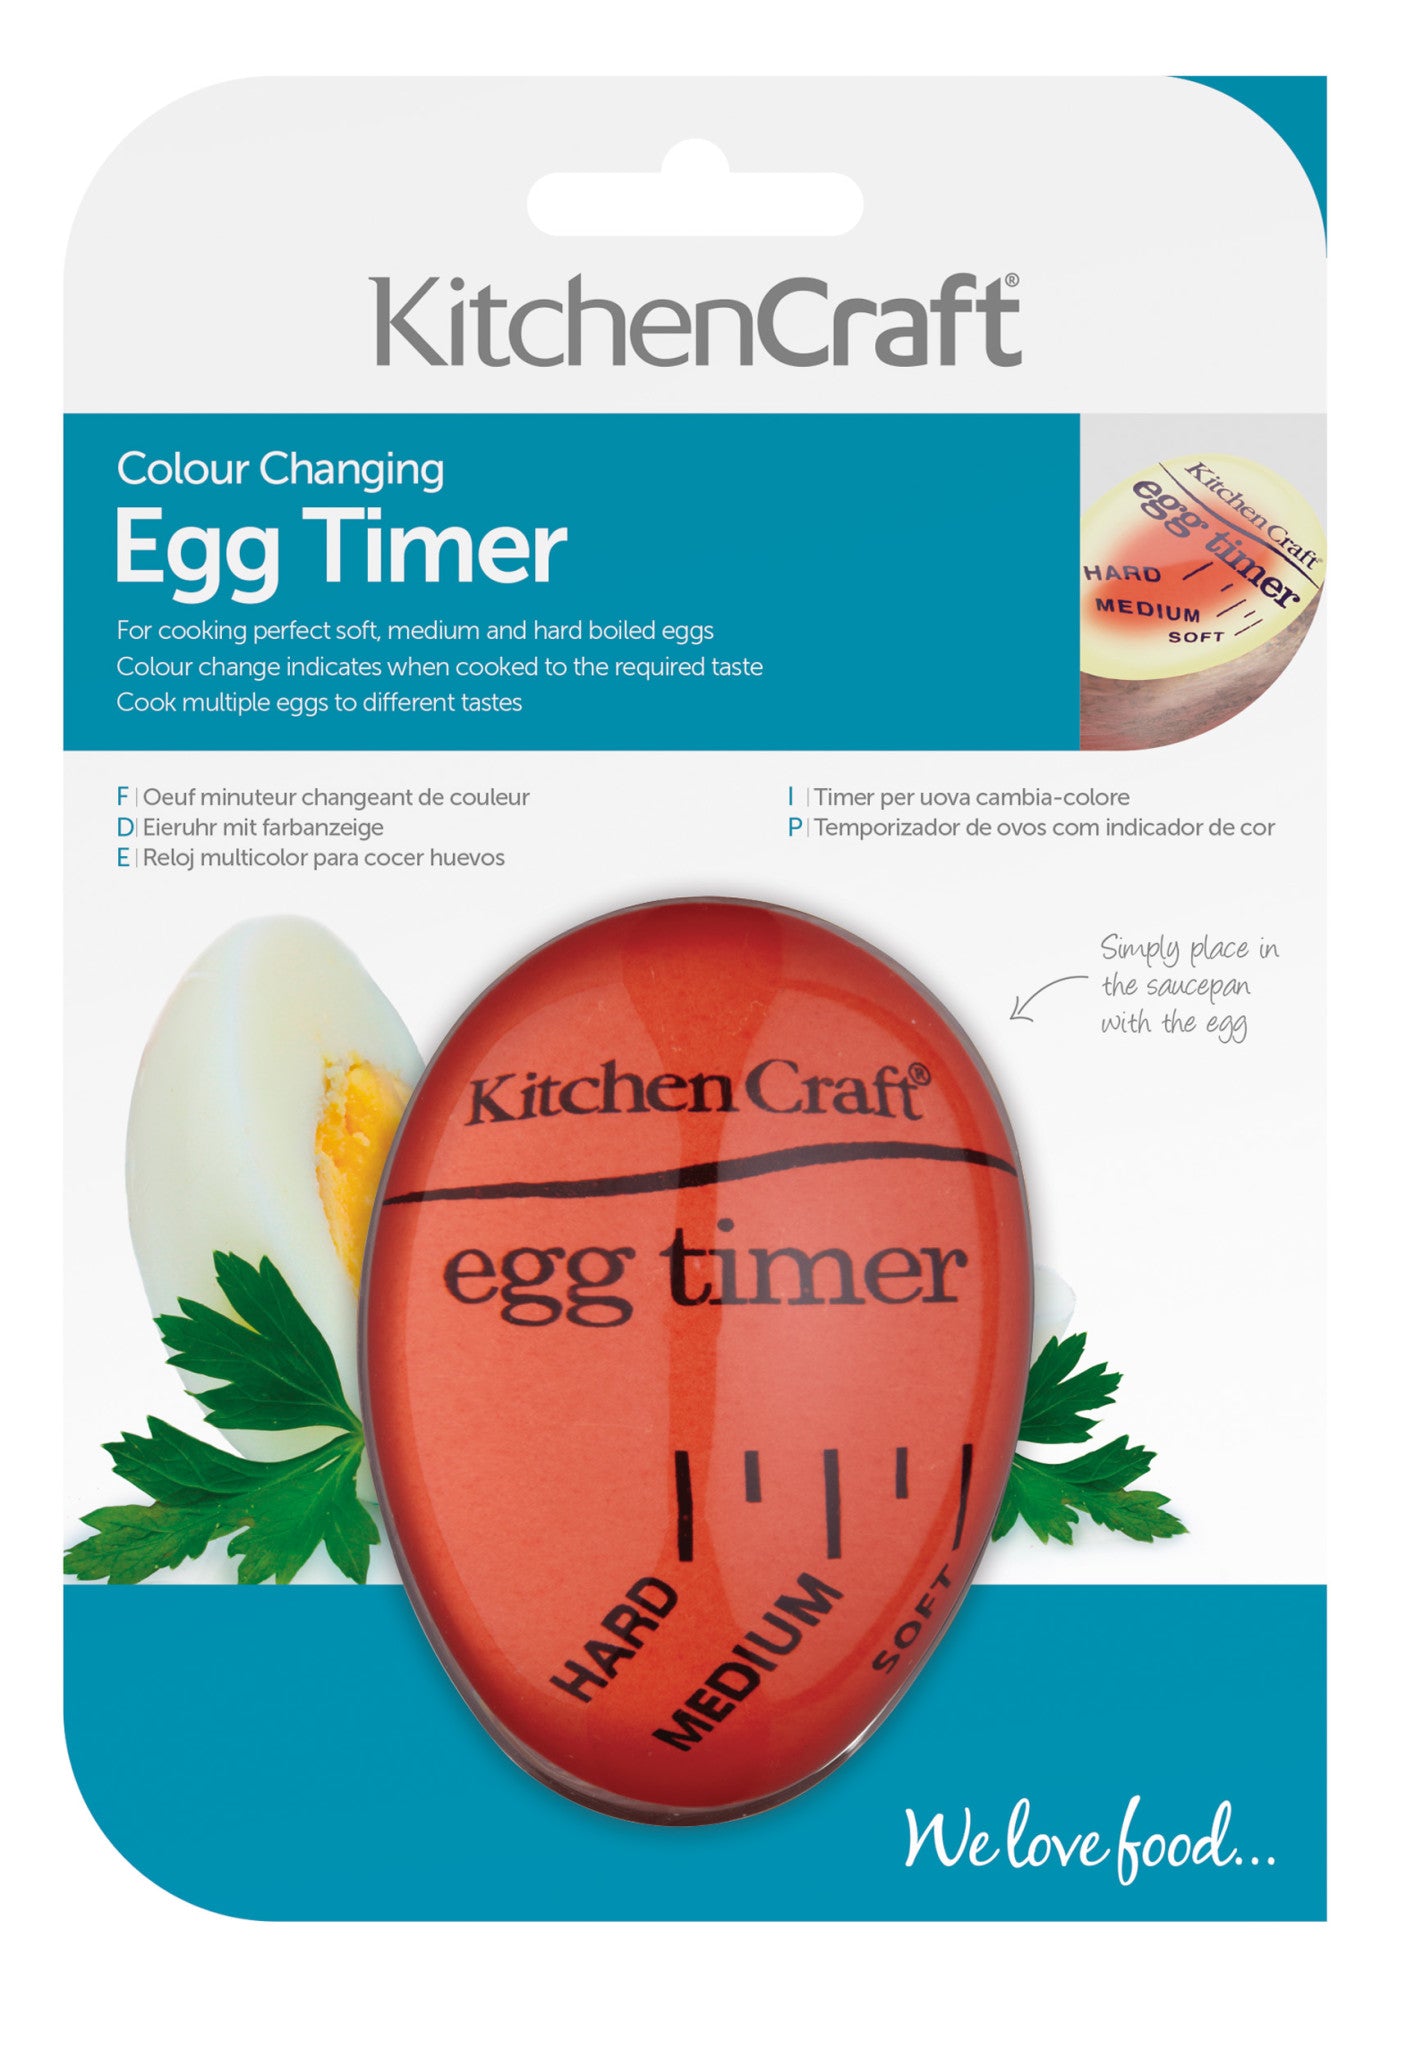 How it works: Kitchen Craft Colour Changing Egg Timer - Yuppiechef Magazine